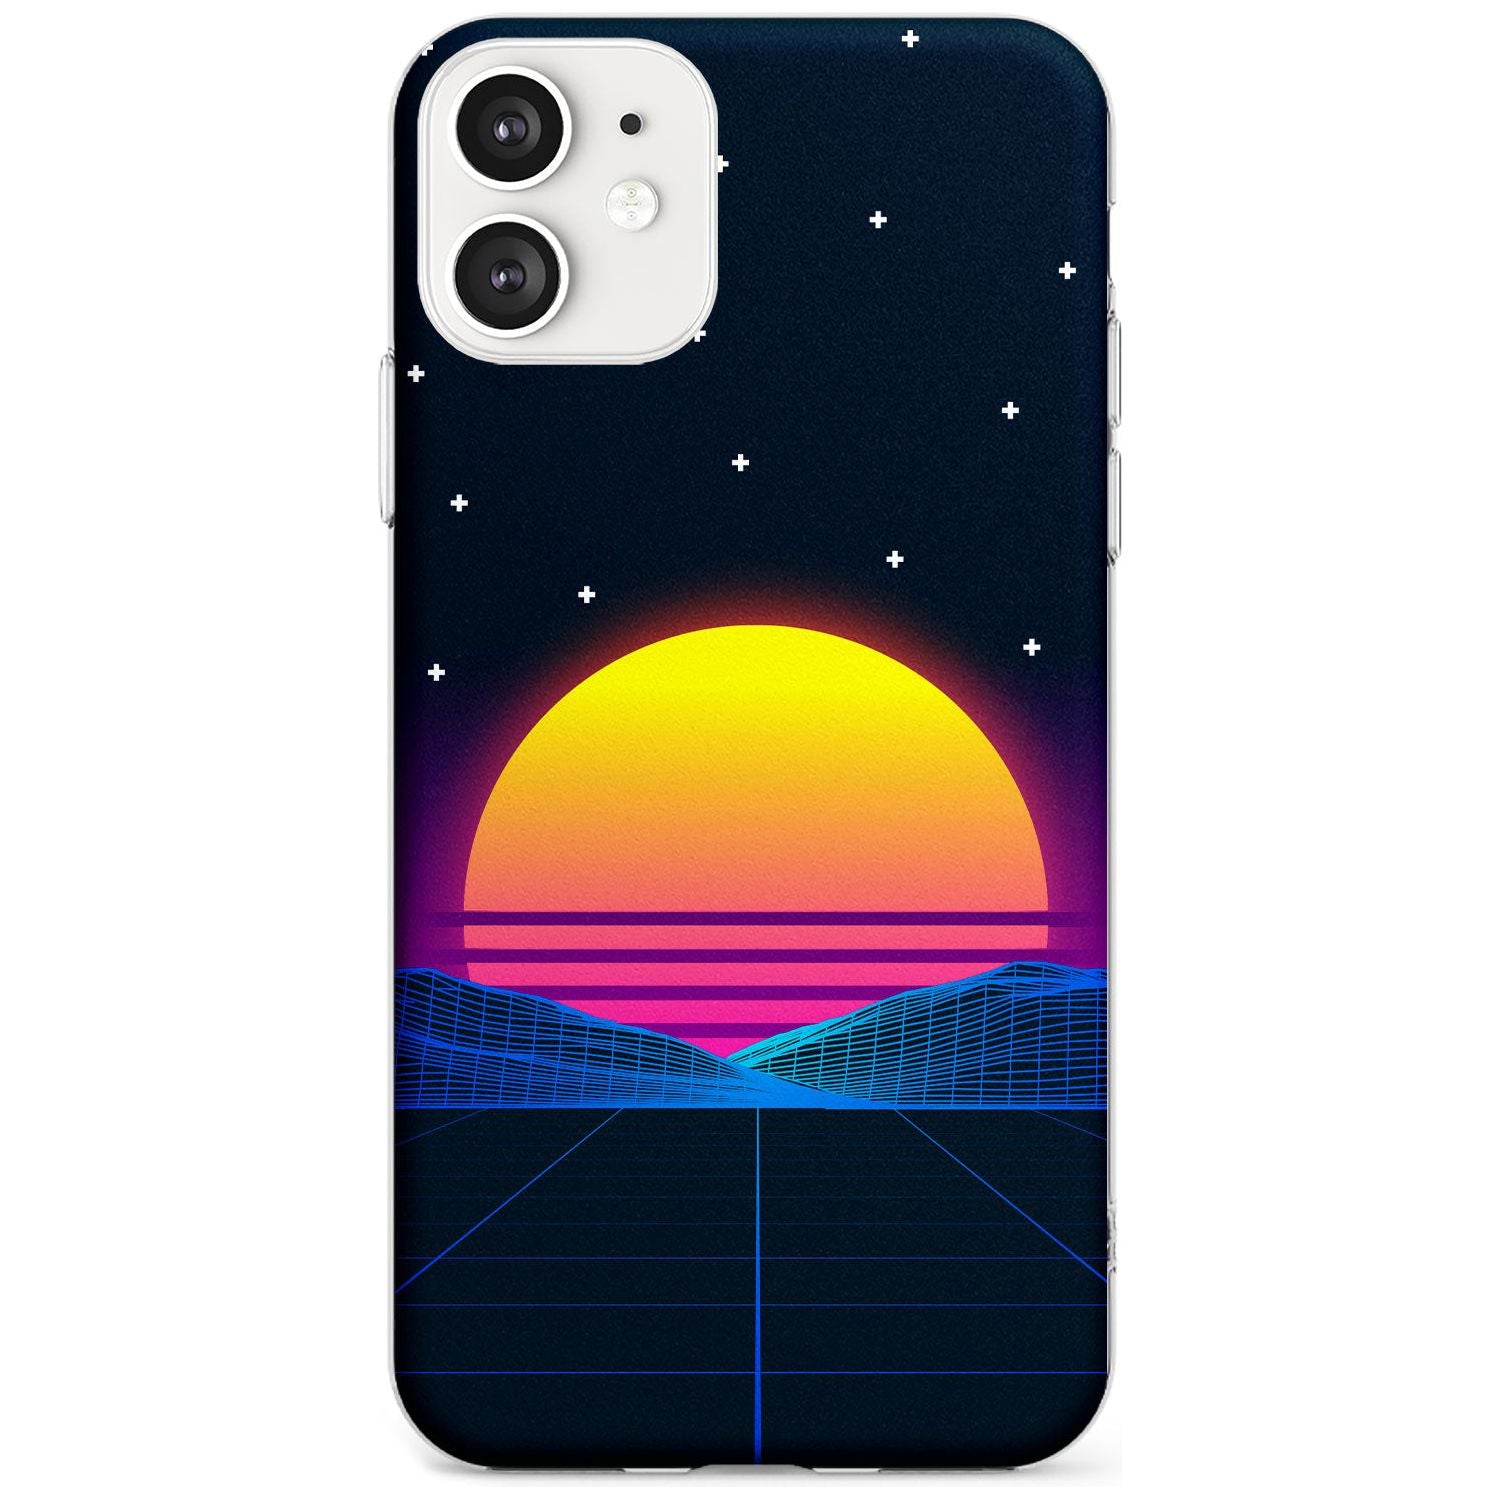 Retro Sunset Vaporwave Slim TPU Phone Case for iPhone 11